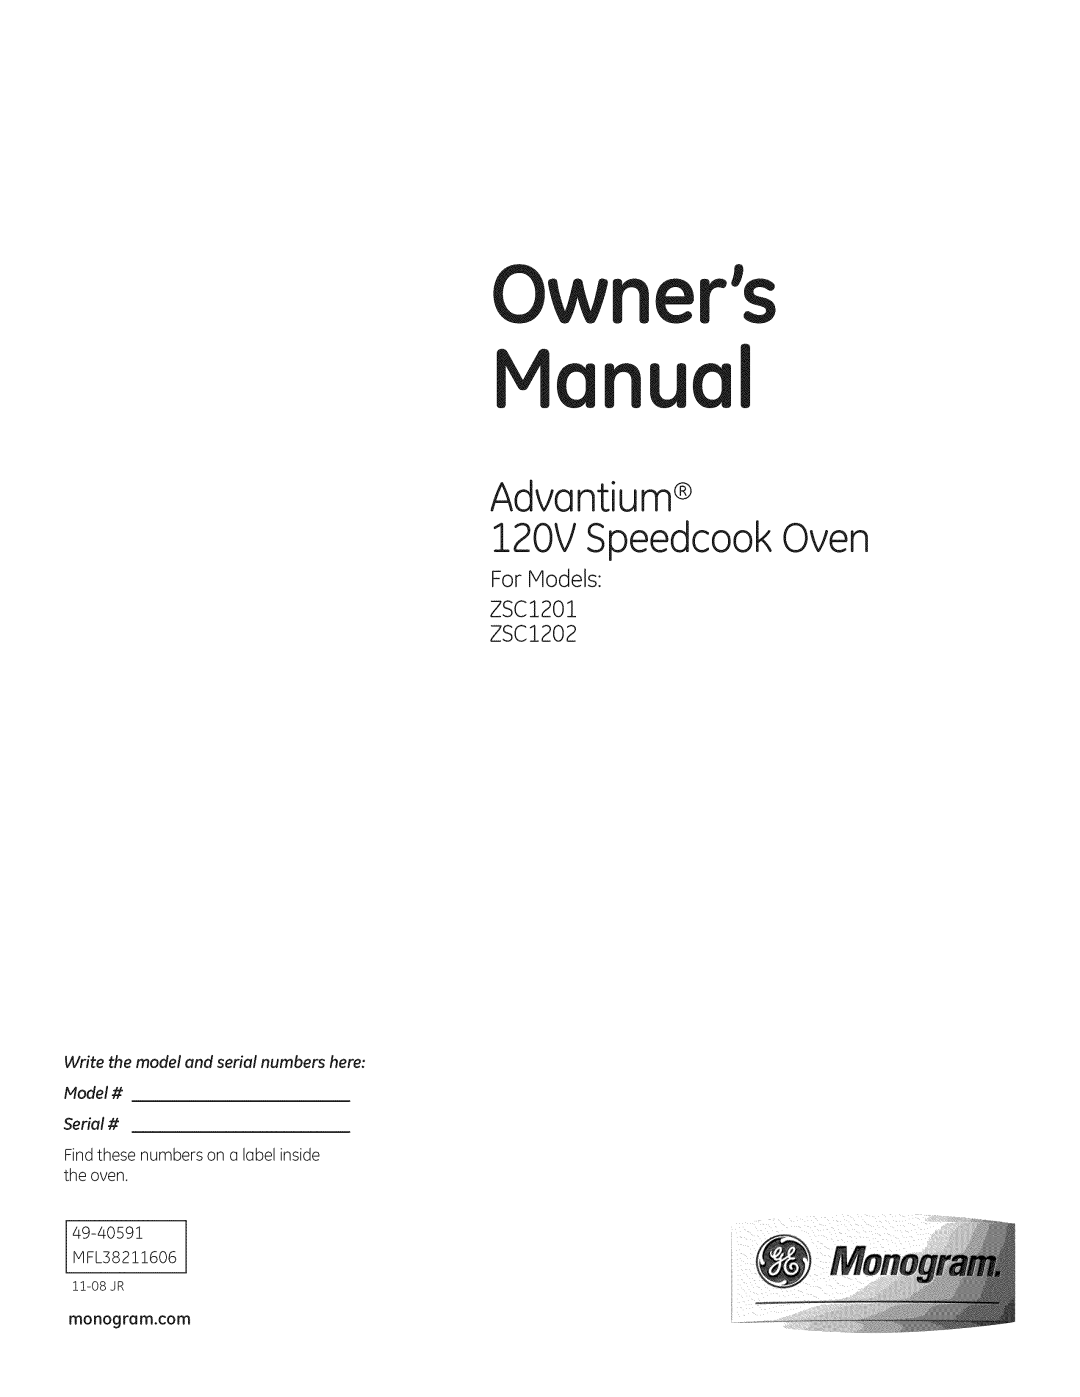 GE Monogram owner manual Advantium, 120V Speedcook Oven, For Models, Manual, Owners, ZSC1201 ZSC1202, 11-08JR 